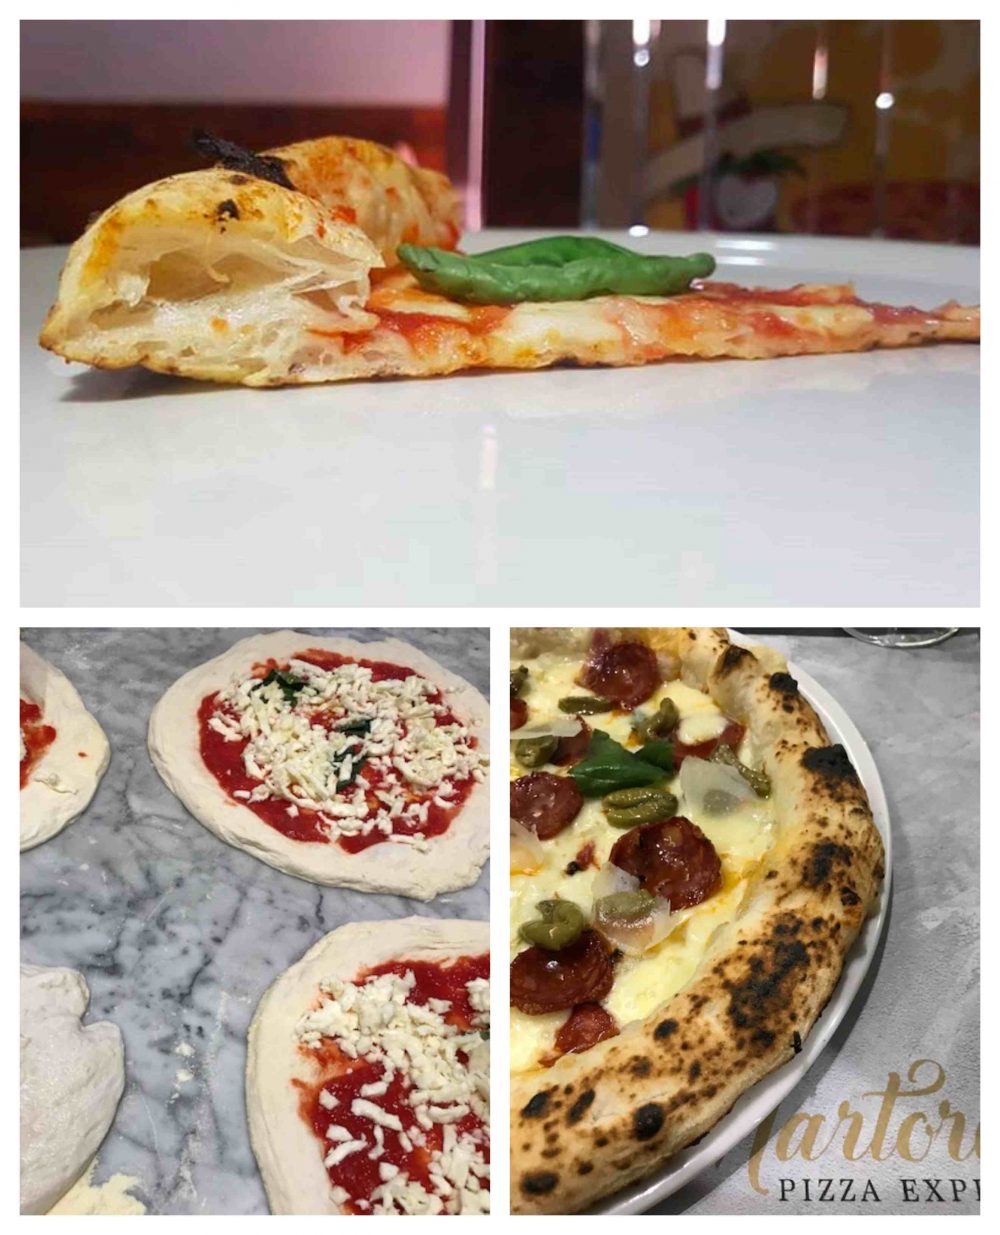 Martorano Pizza Experience, pizze